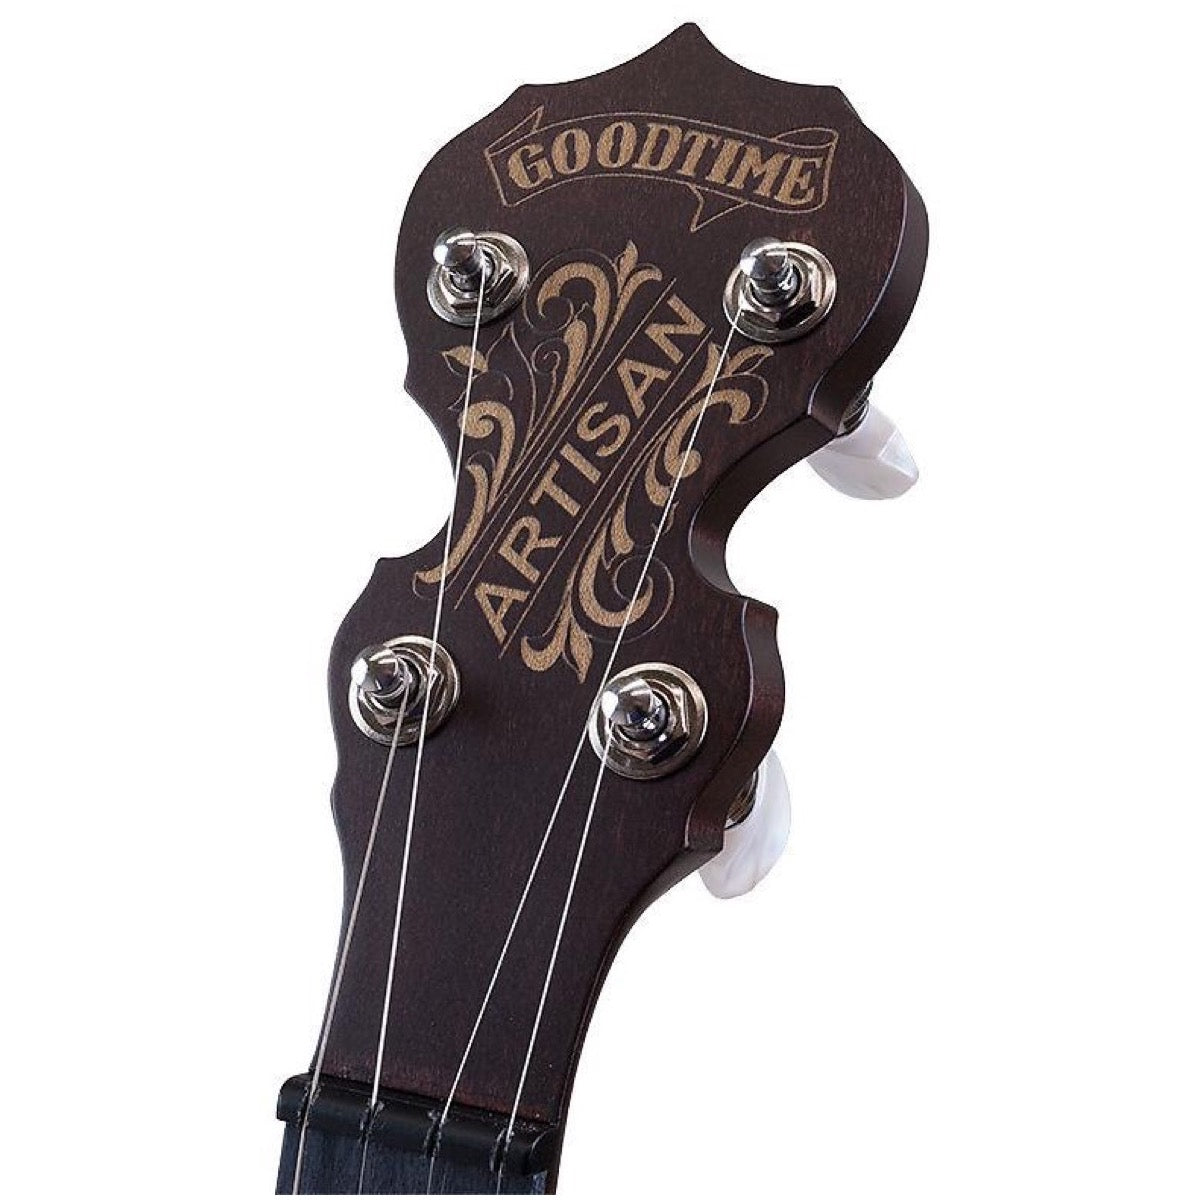 Deering Artisan Goodtime Open-Back Banjo, 5-String